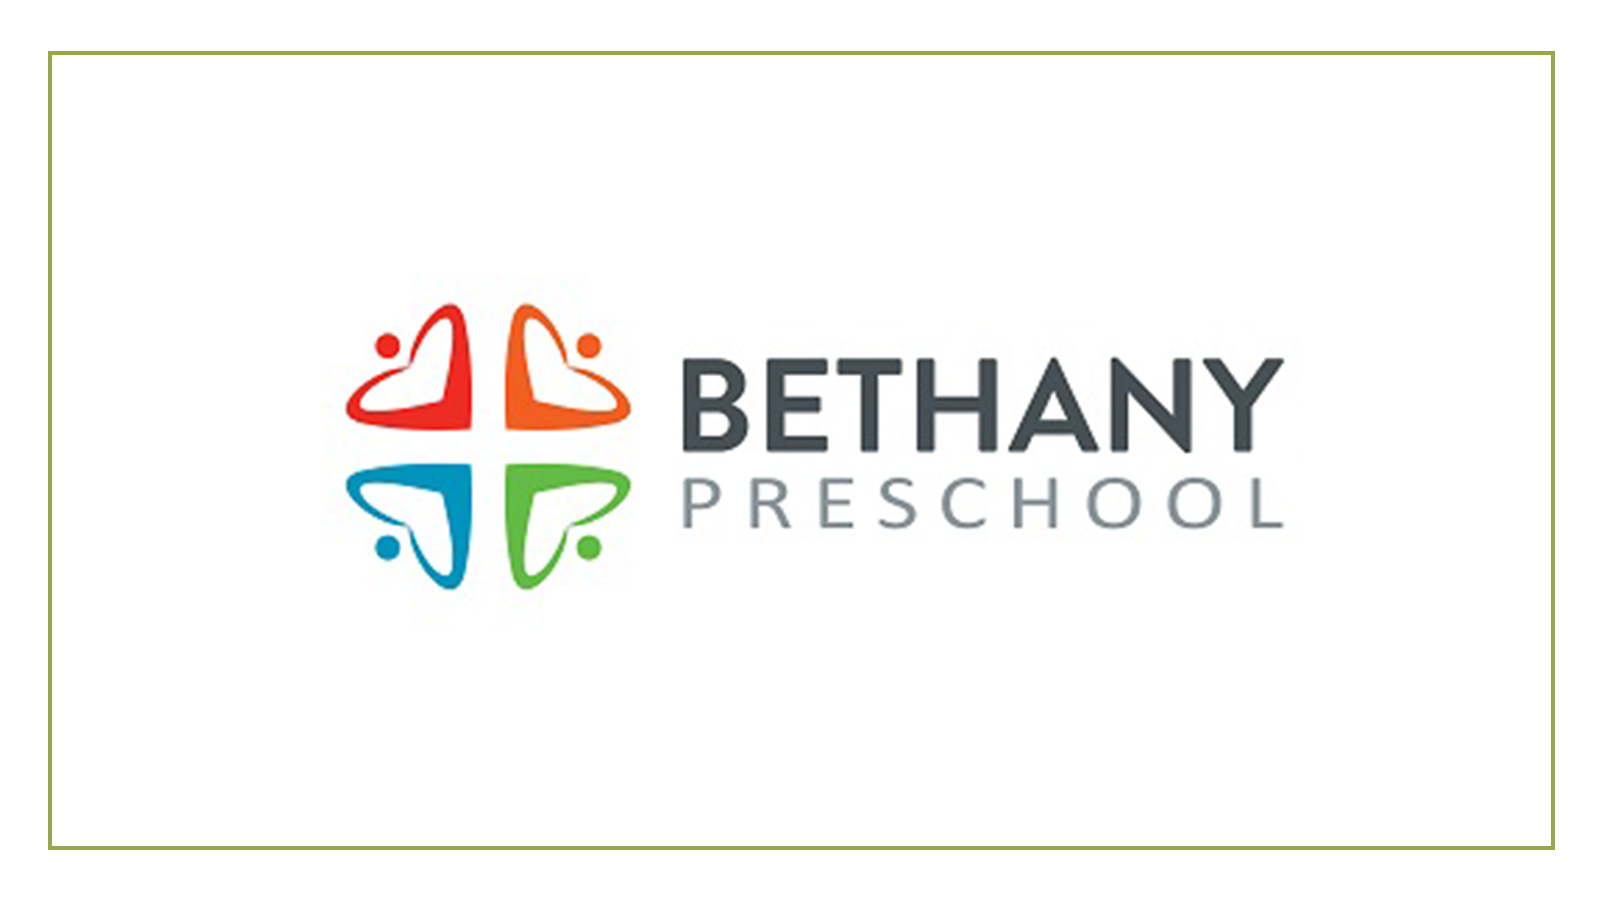 Bethany preschool logo